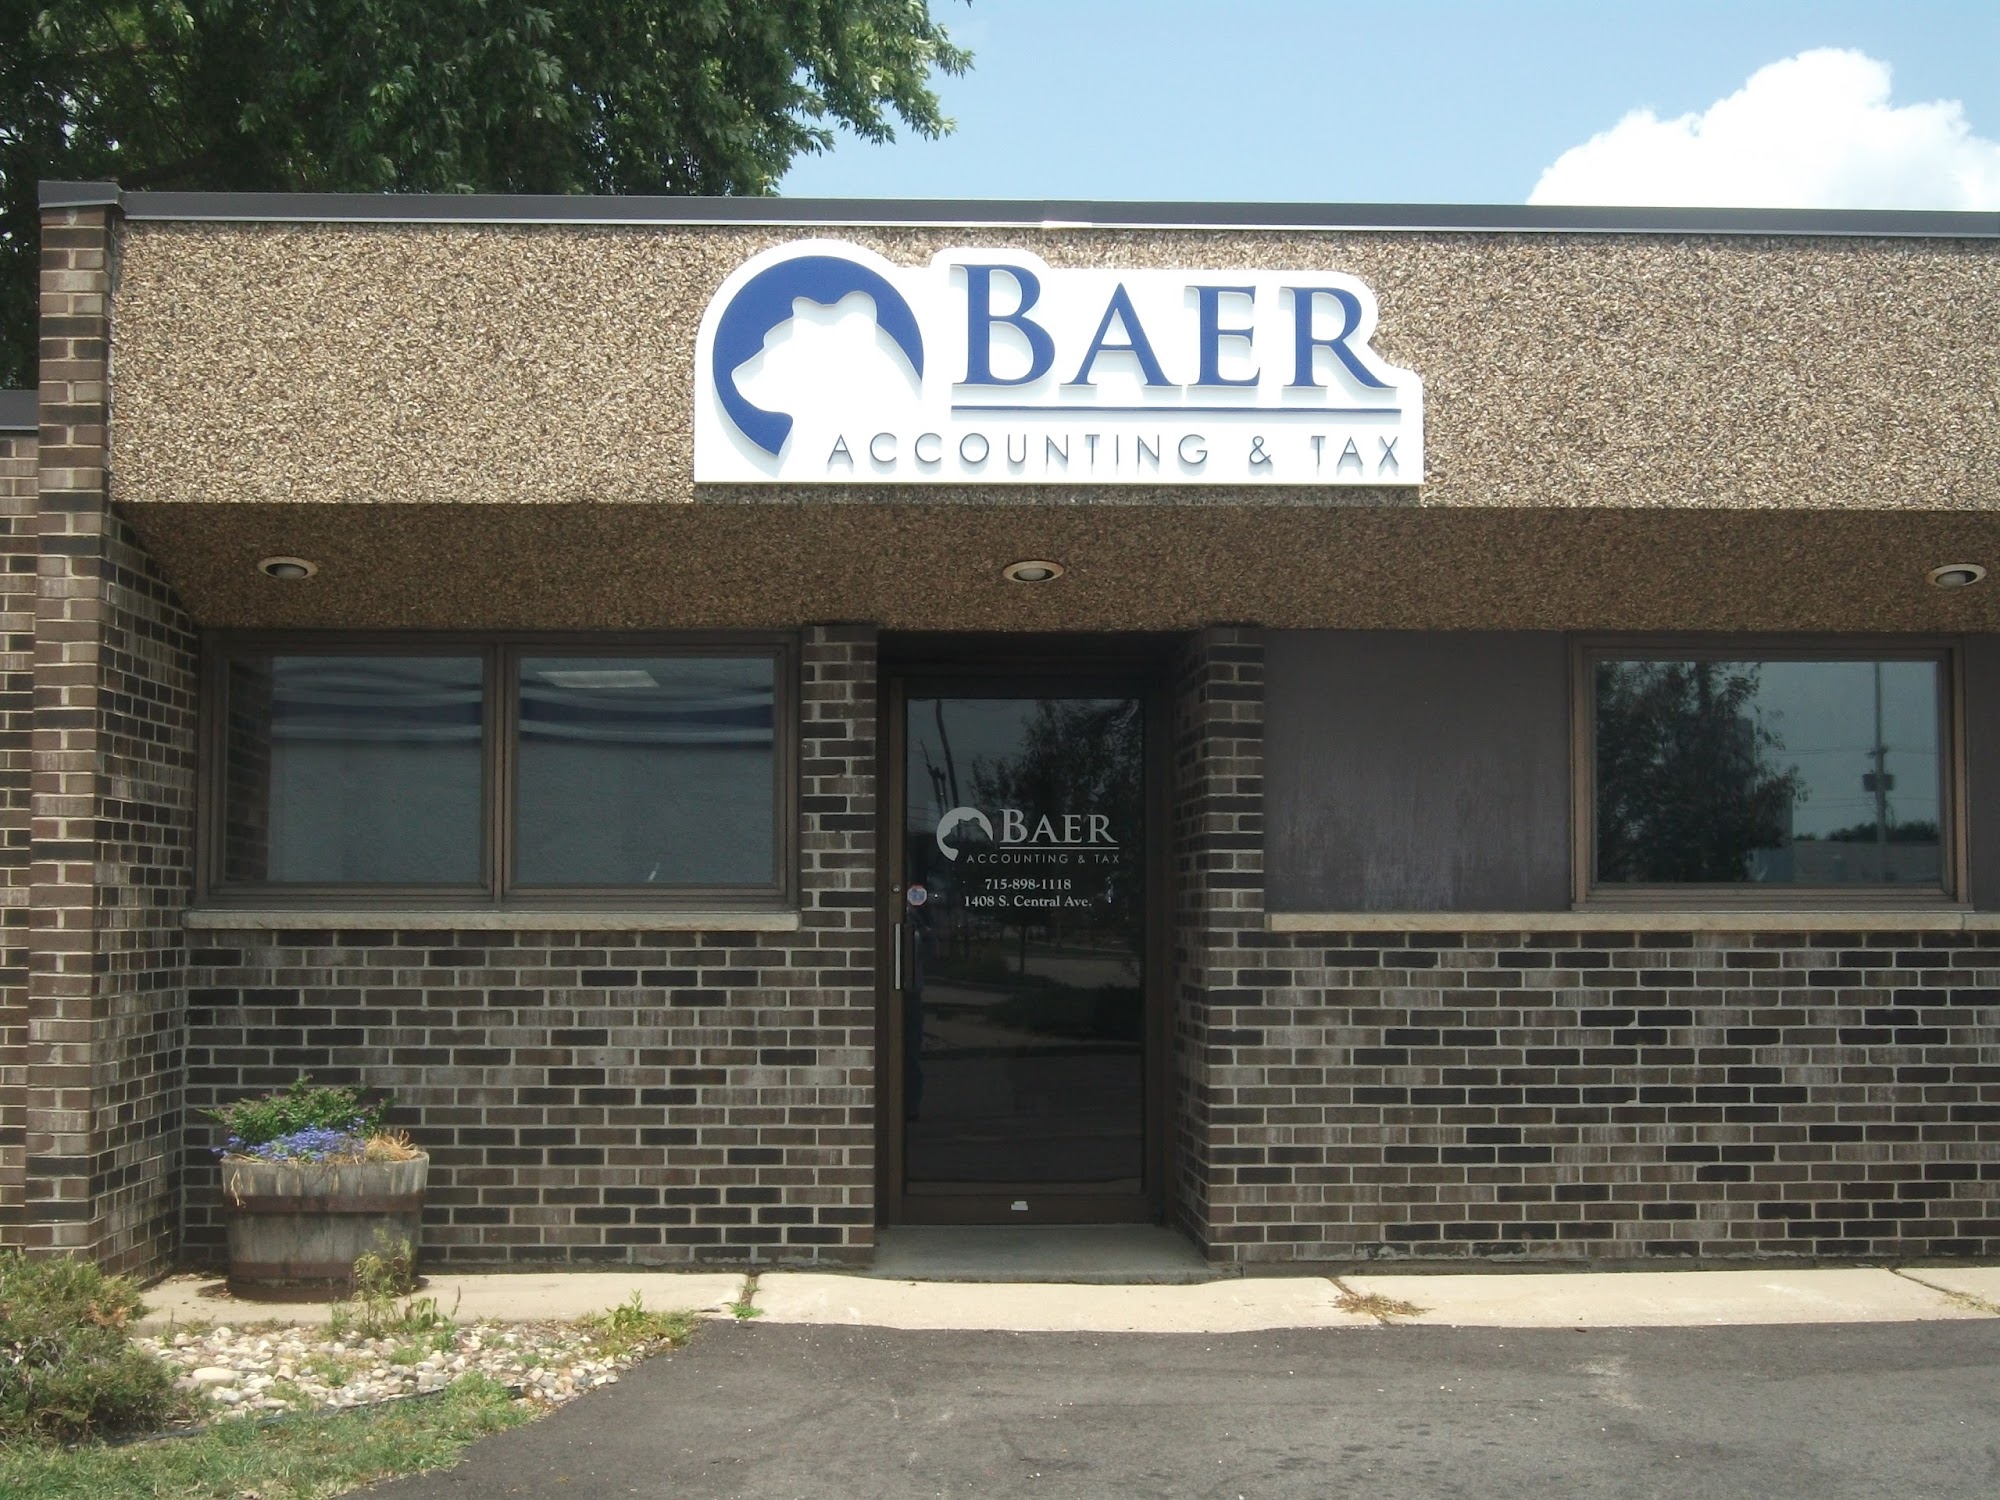 Baer Accounting & Tax